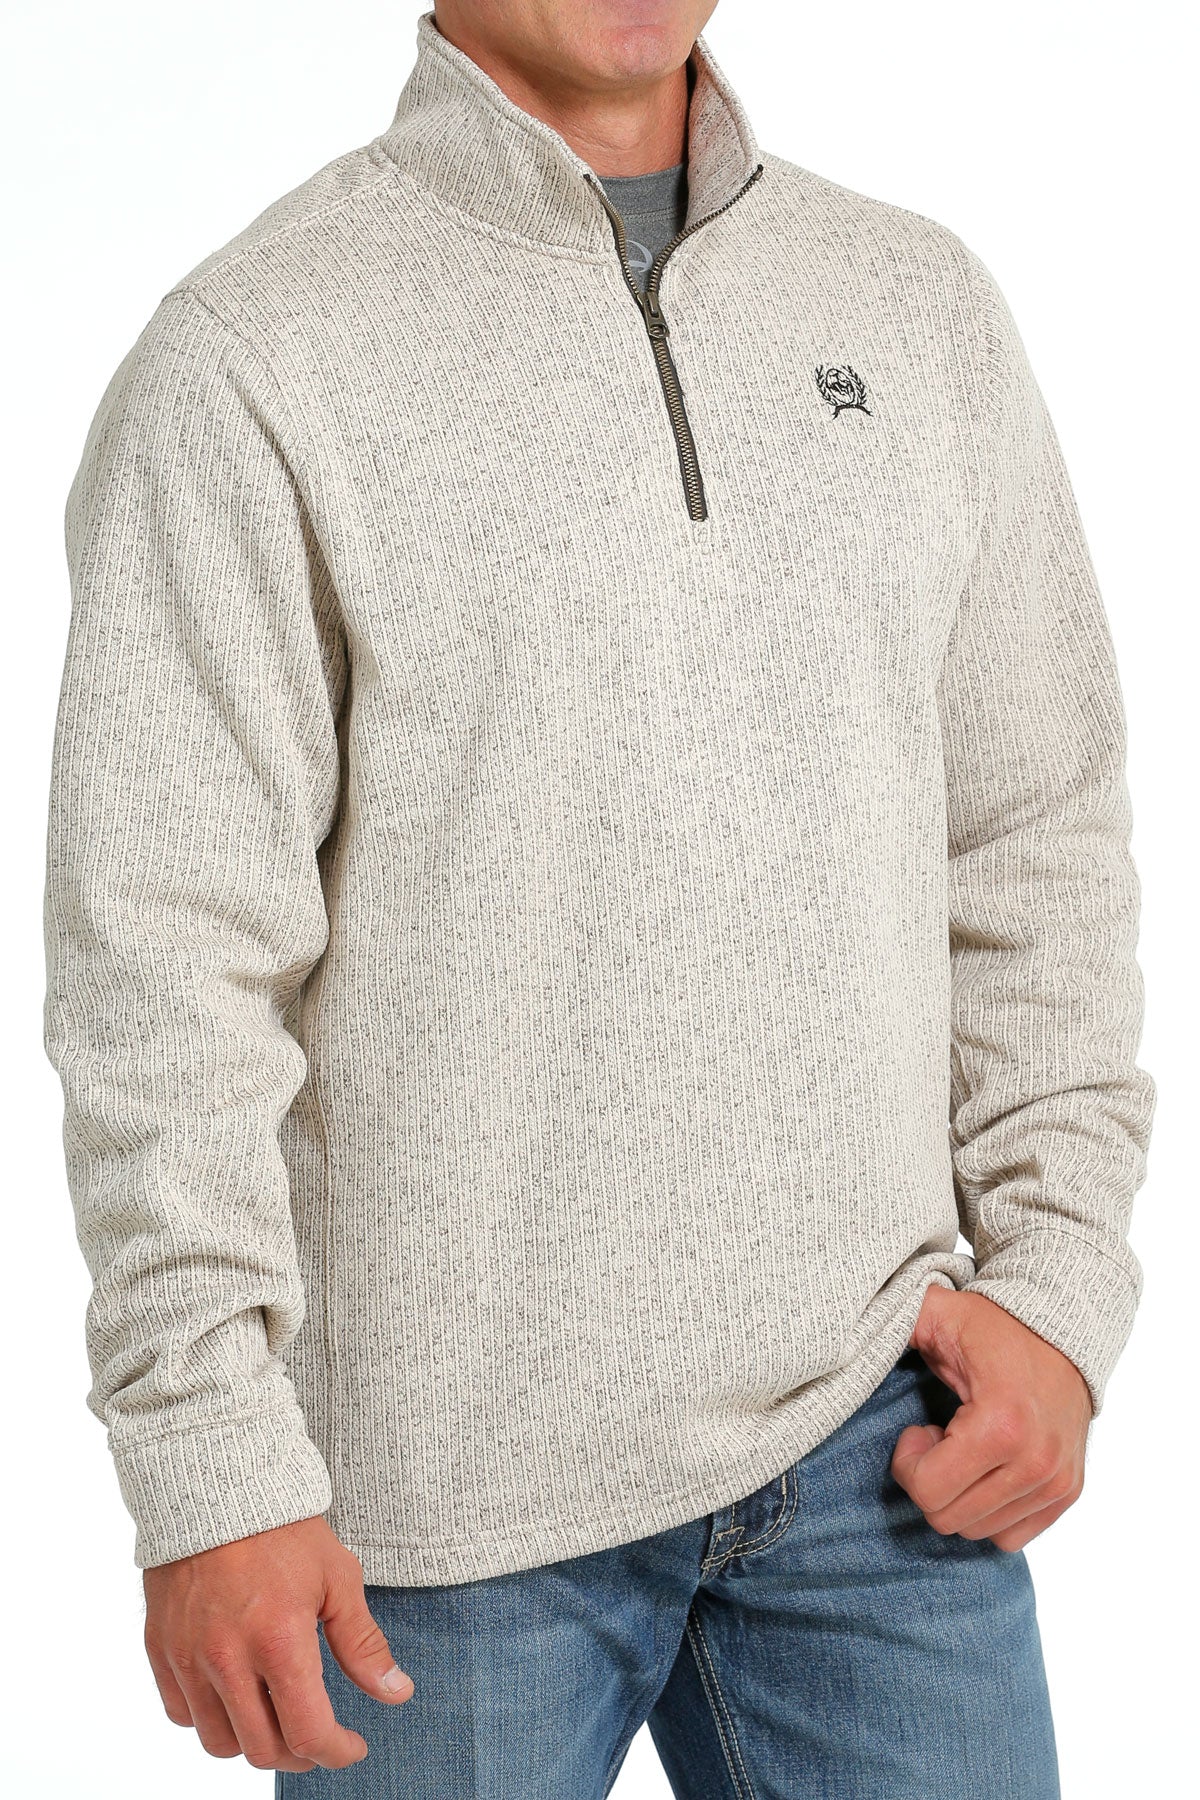 Cinch Men's Stone Quarter Zip Sweater Knit Jacket